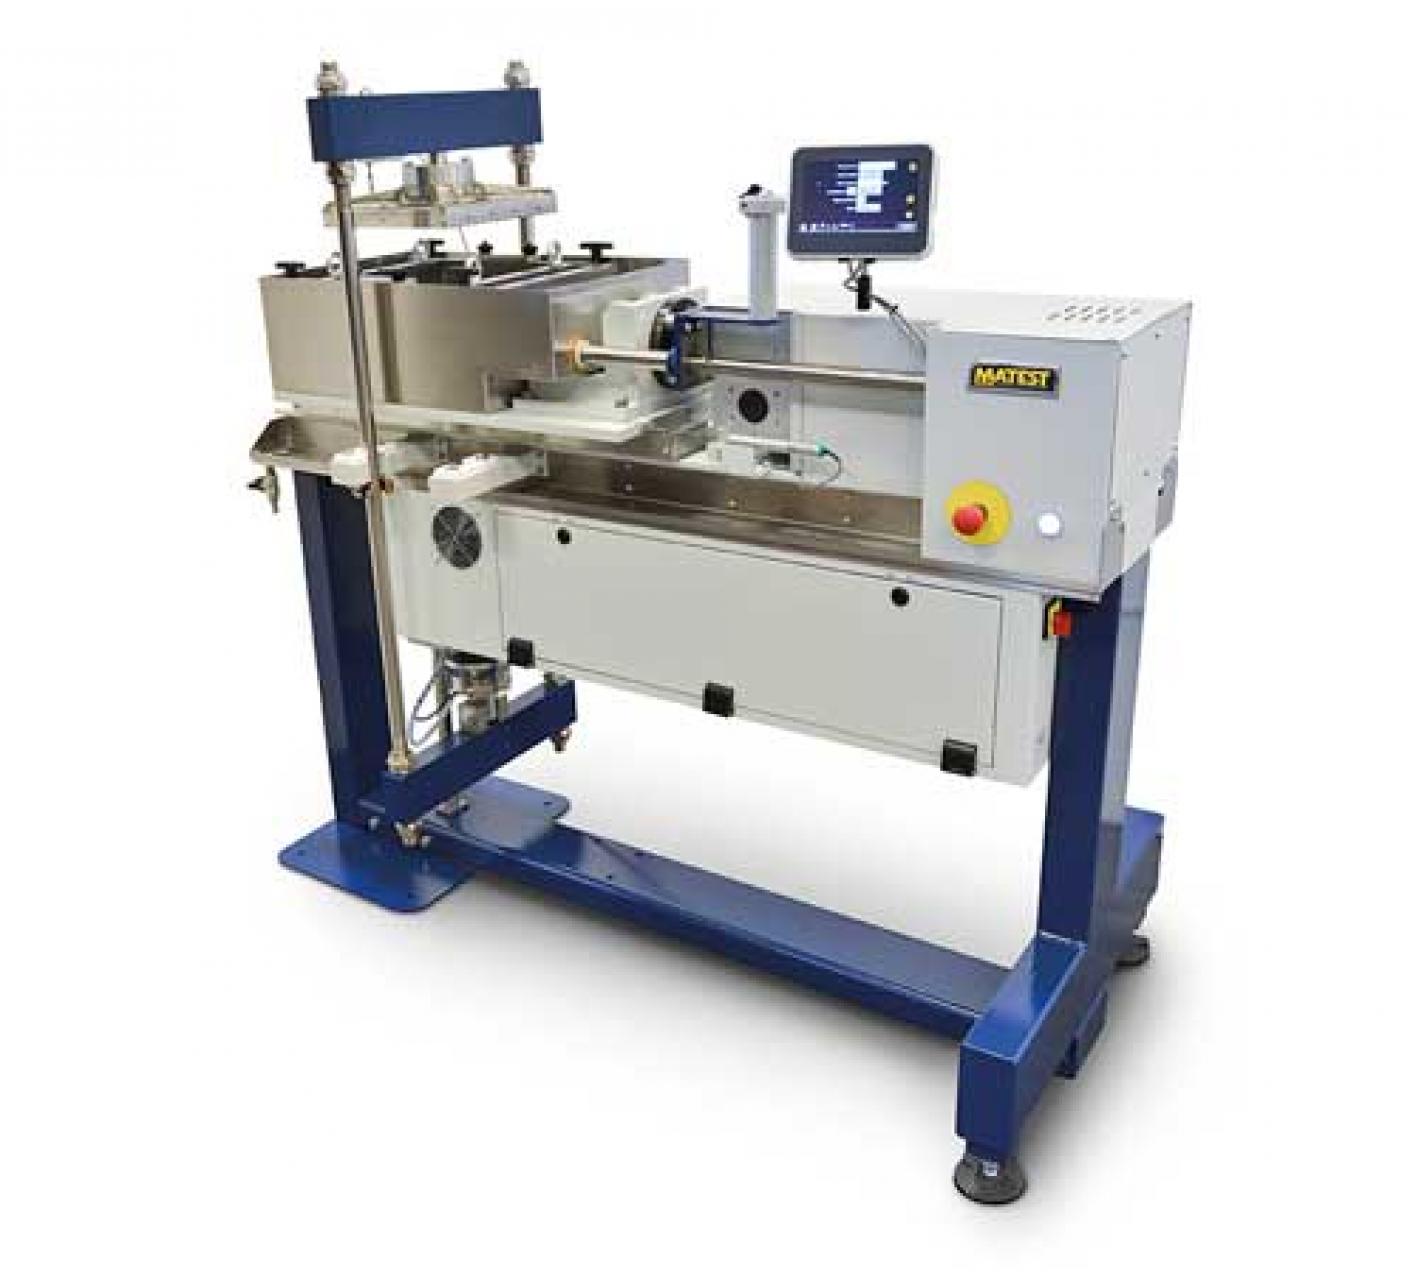 Electromechanical shear machine for large-sized samples